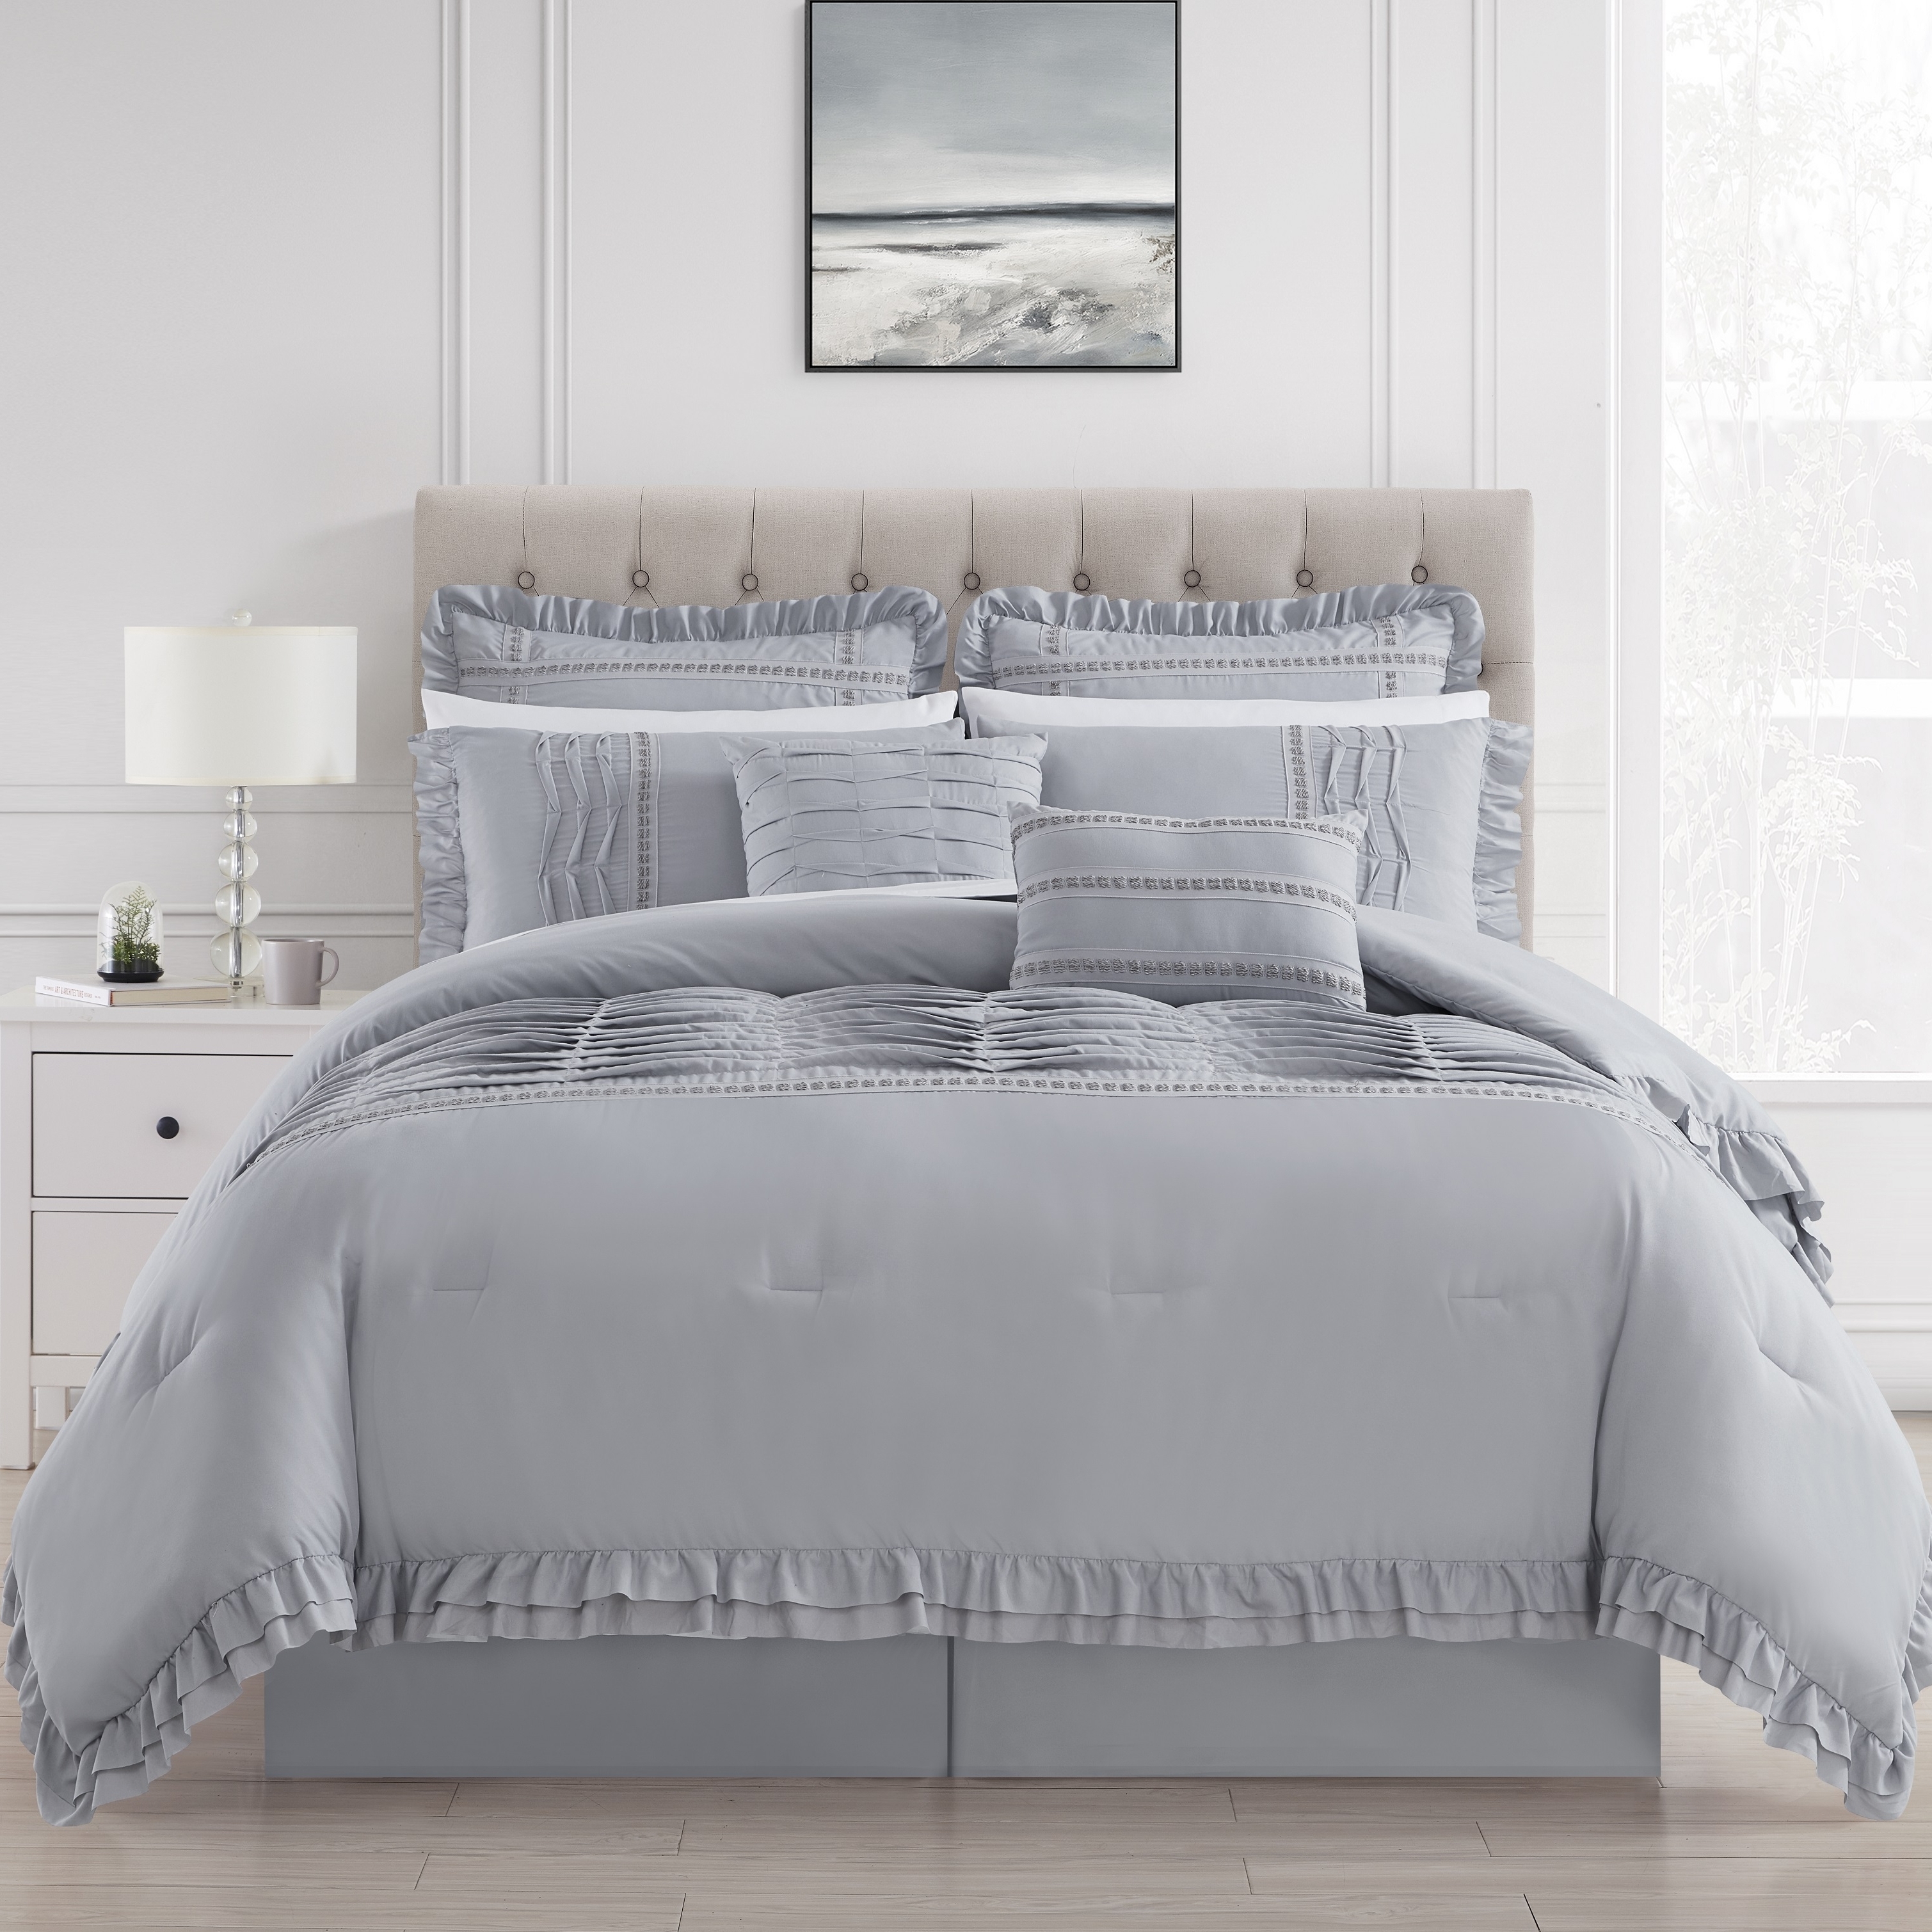 Yvonna 8 Piece Comforter Set Ruffled Pleated Flange Border Design Bedding - Beige, Queen